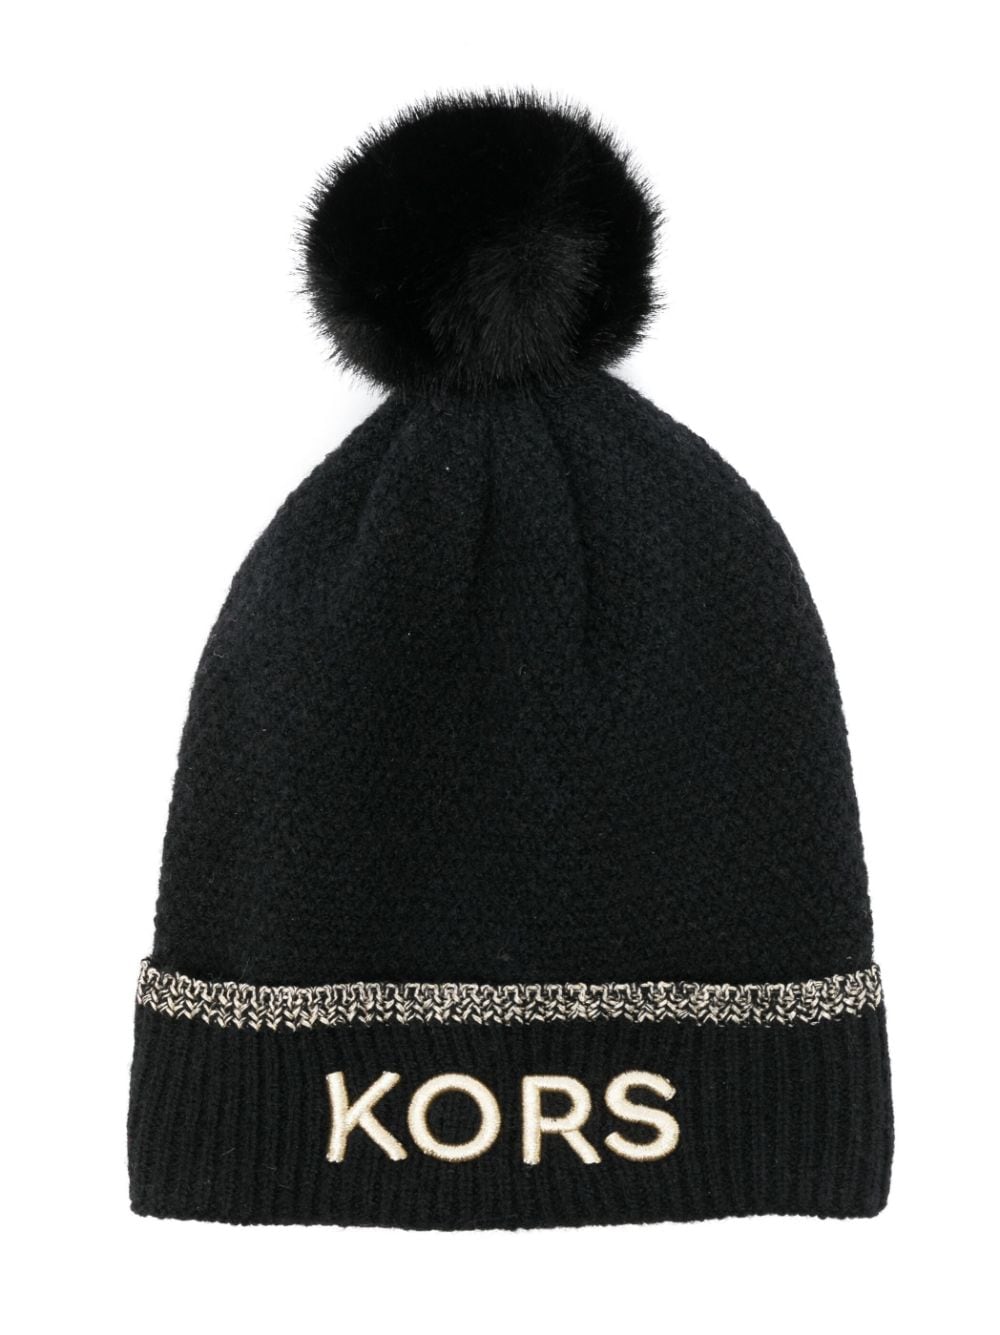 Michael Kors Kids embroidered-logo knit beanie - Black